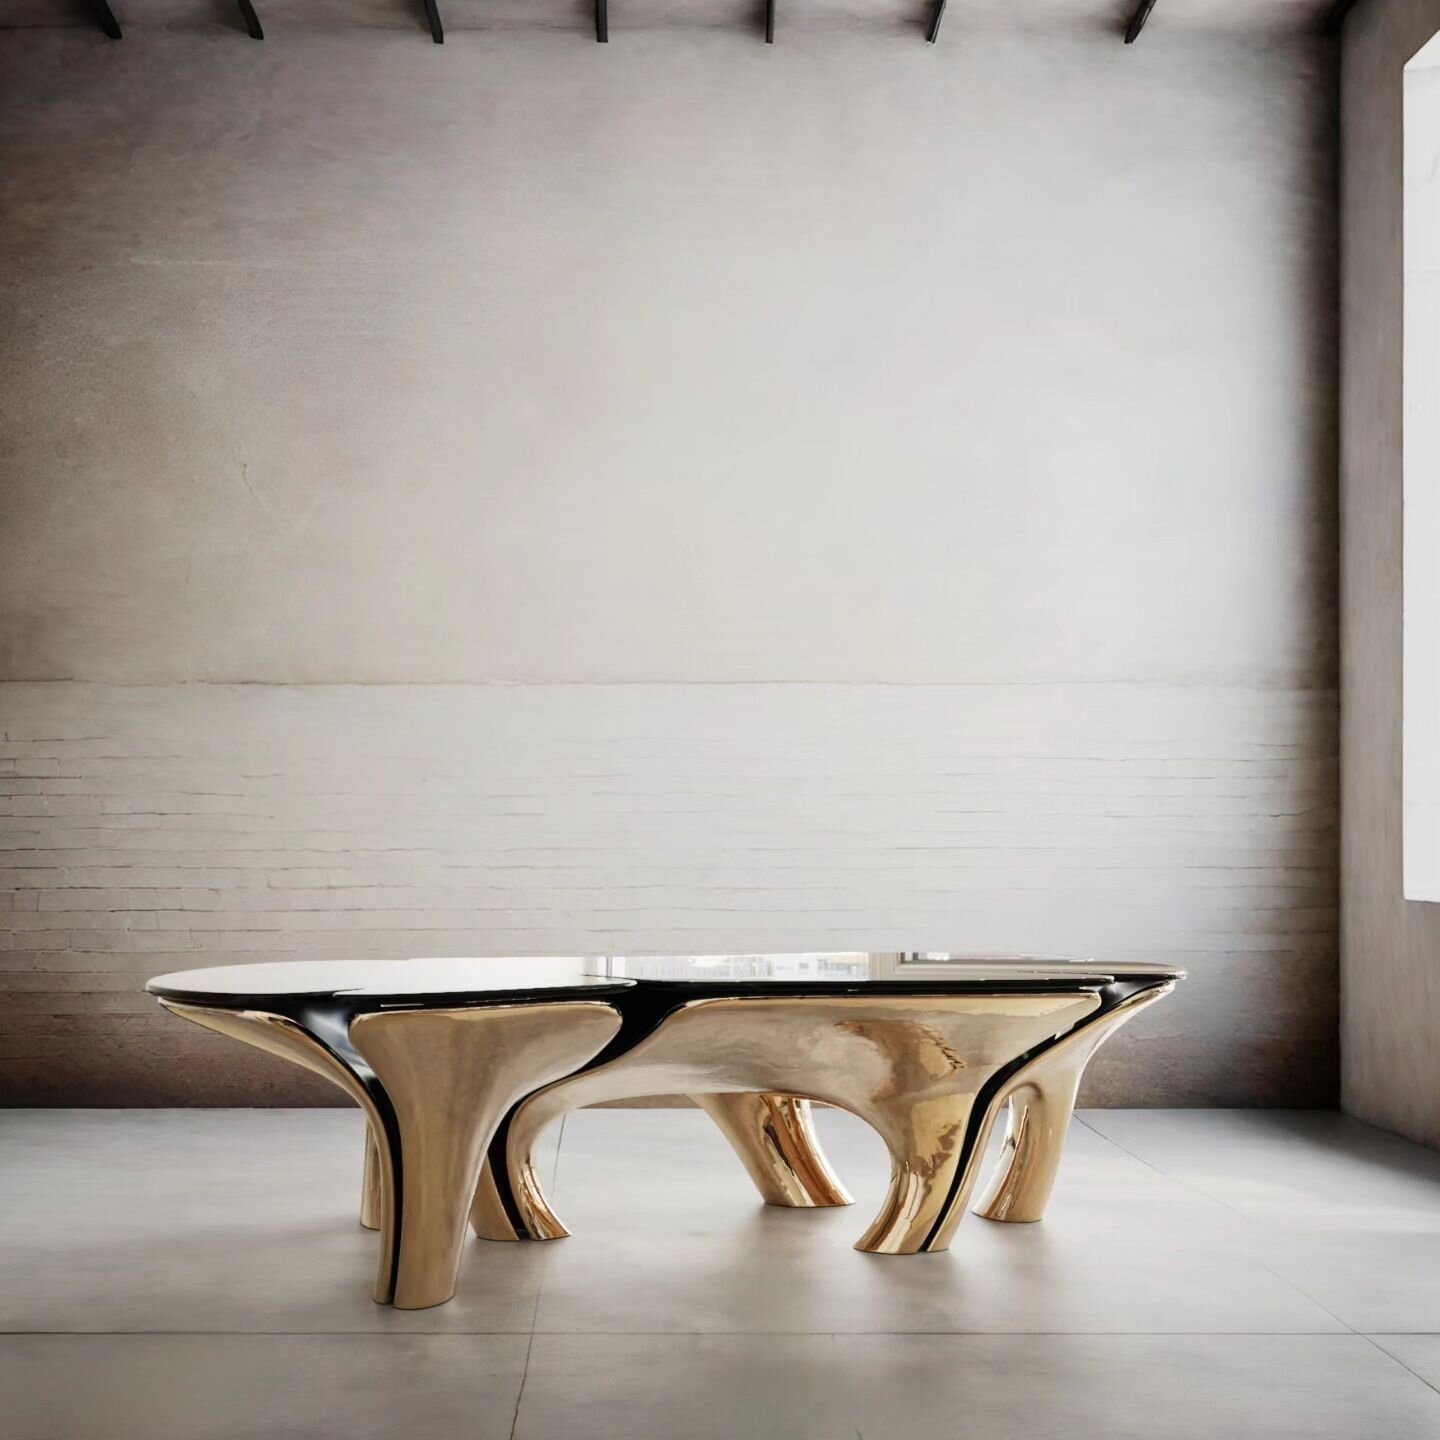 Amoeba Table - 2024
.
.
.
.
.
.
.

#artfurniture #polished #metal #metalart #glass #industrialdesign #bronze  #furnituredesign #exclusive  #limitededition #table #luxury #architecture #sculpture #welding #metalfabrication #contemporaryfurniture #art 